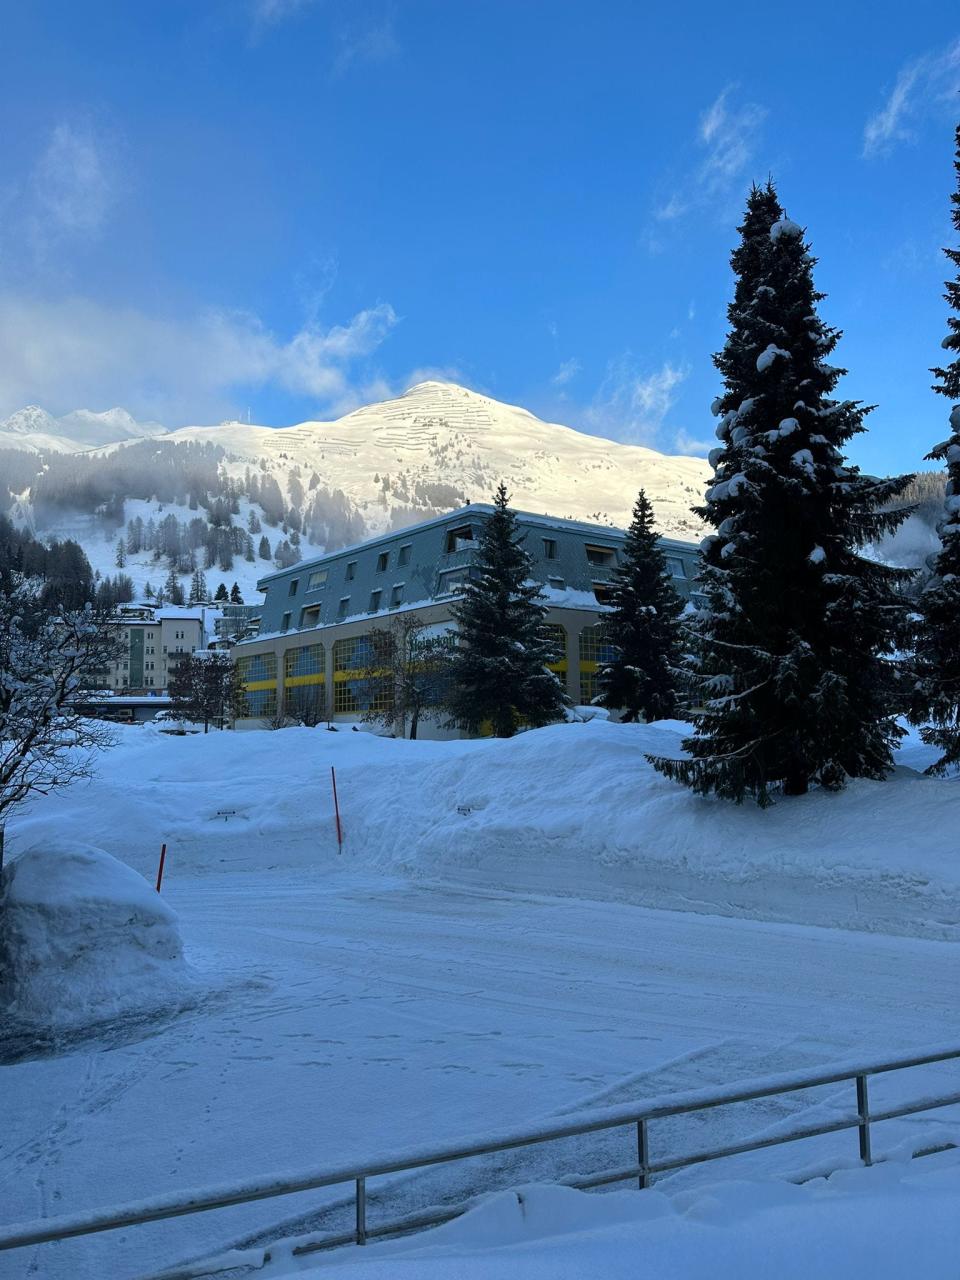 Davos is a Swiss ski resort